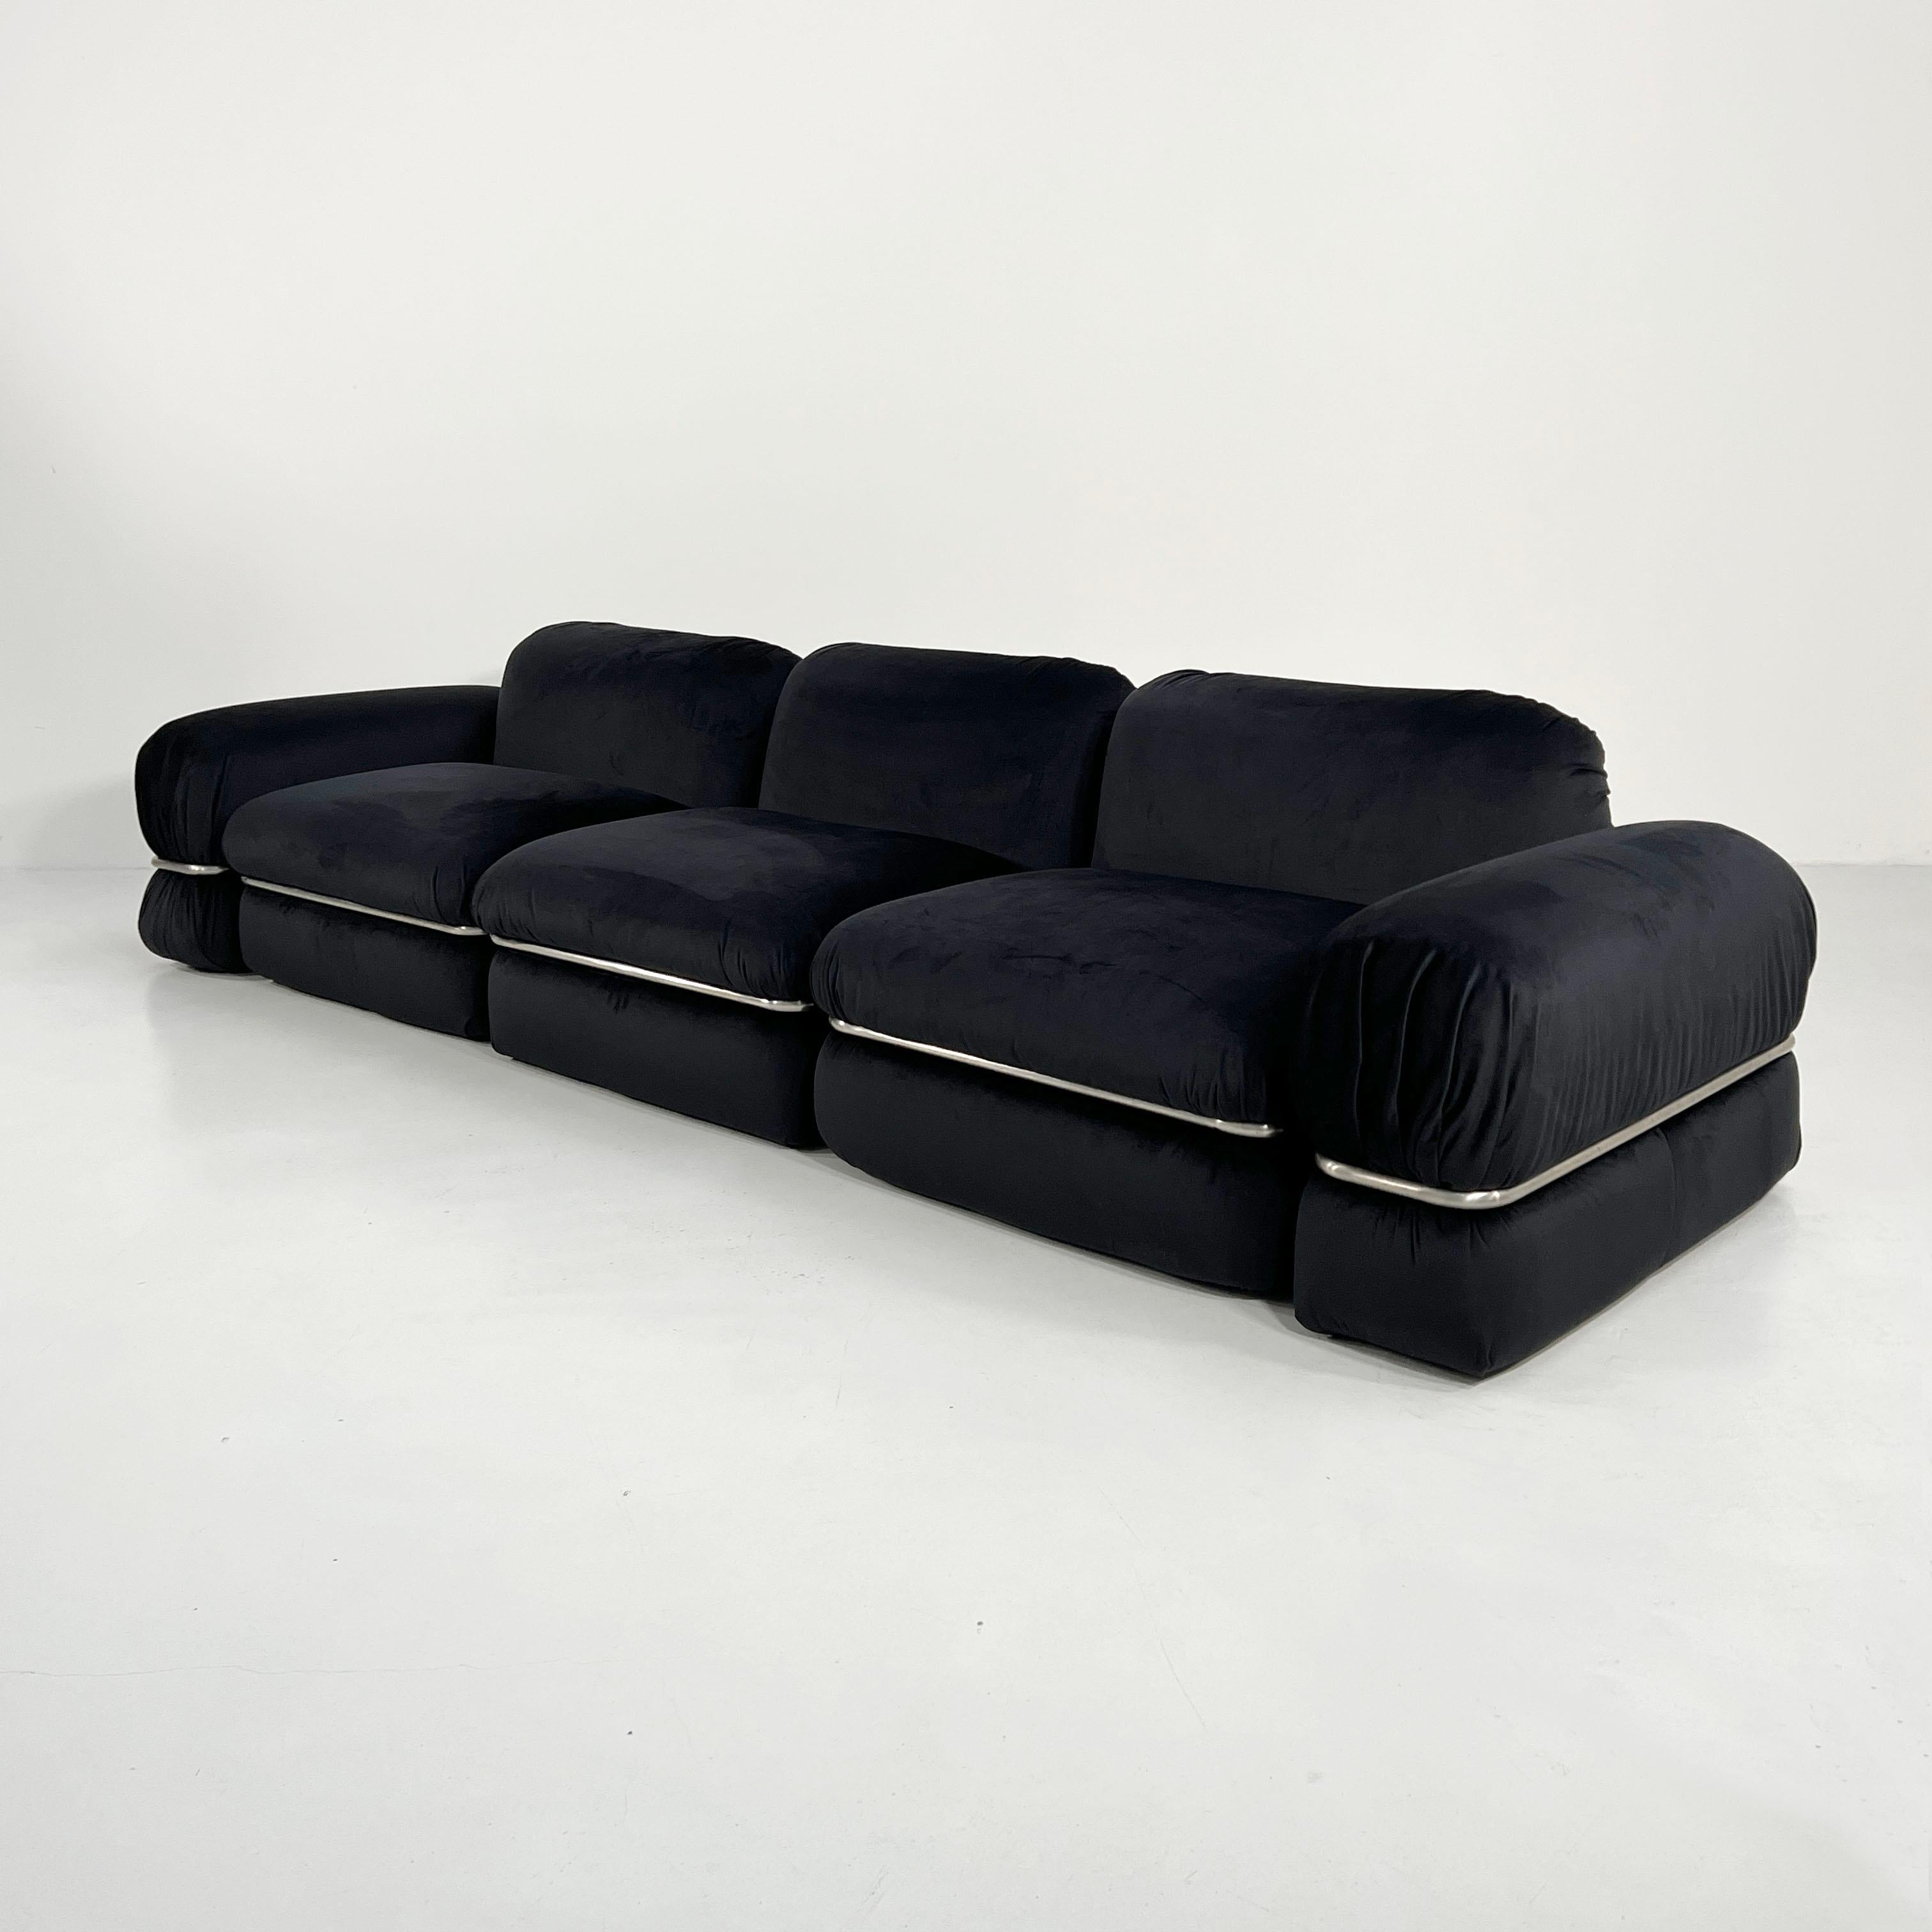 Designer - Rodolfo Bonetto
Producer - Tecnosalotto
Model - T/1 Modular Sofa
Design Period - Sixties 
Measurements - 1 Element = Width 71 cm x Depth 84 cm x Height 63 cm x Seat Height 36 cm - 1 Armrest = Width 27 cm x Depth 84 cm x Height 49 cm